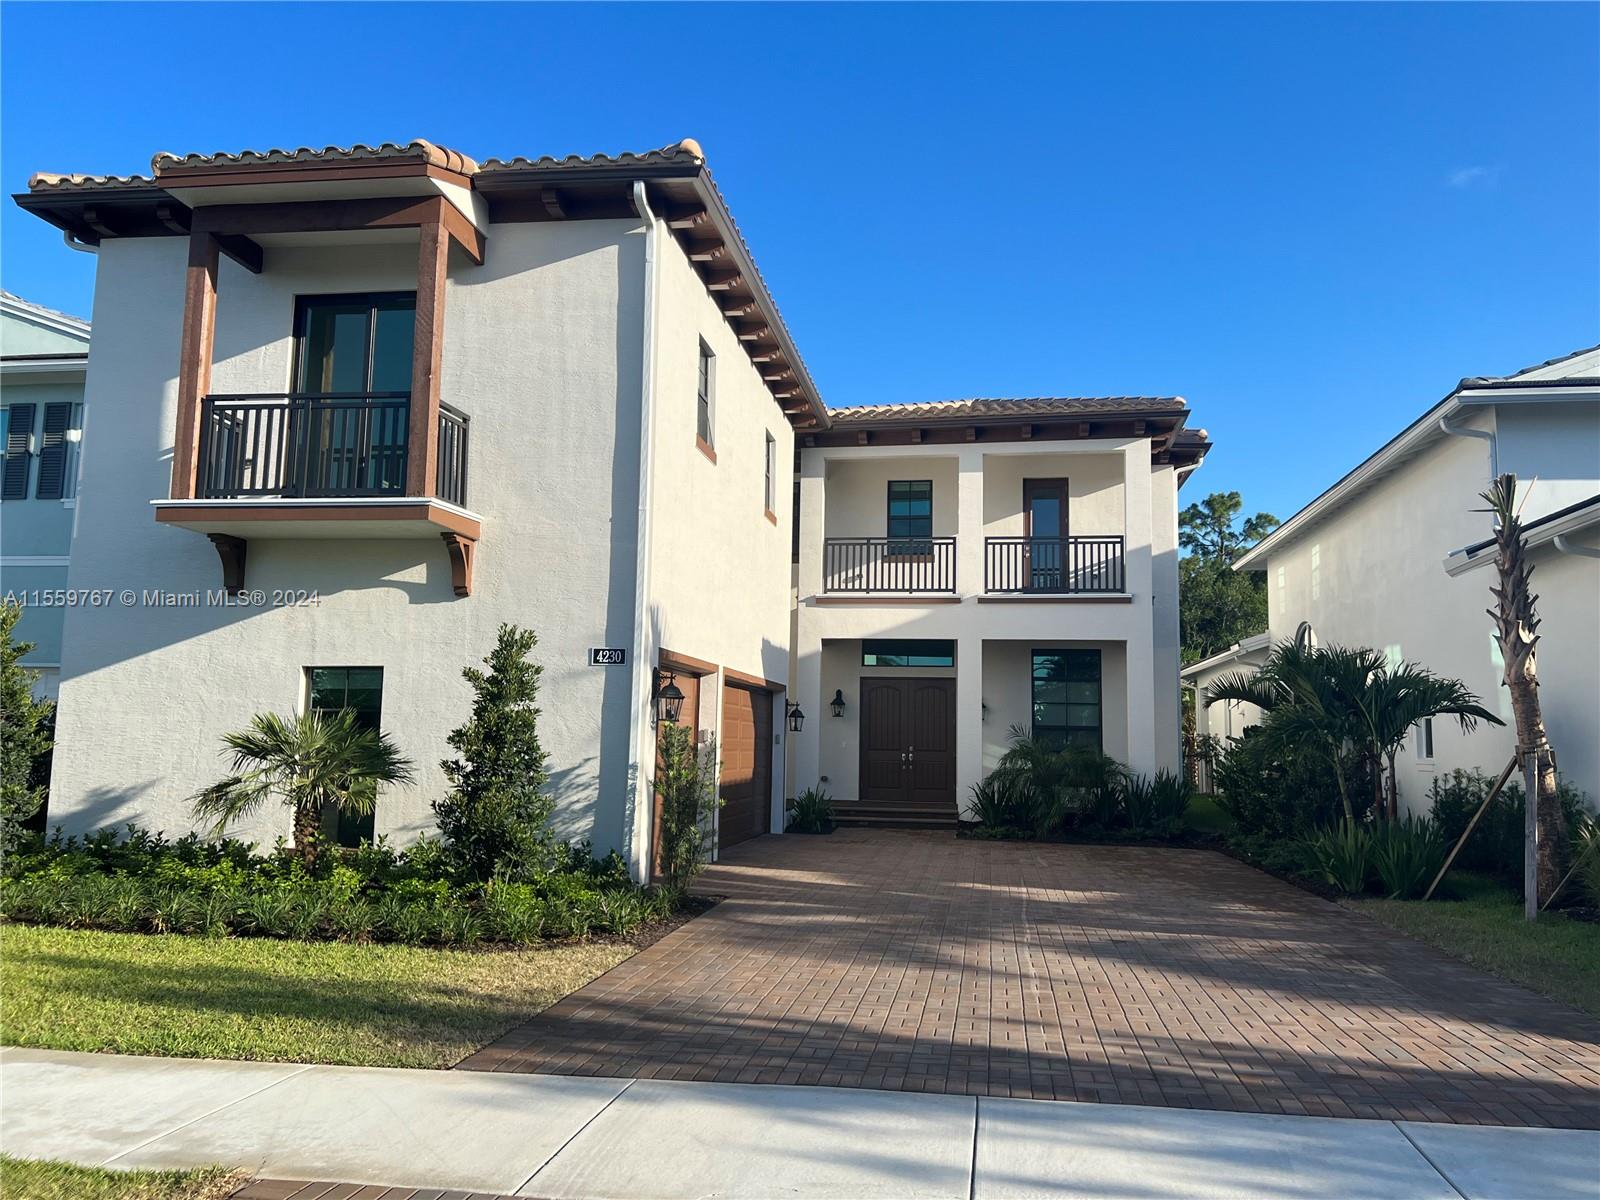 Rental Property at 4230 Mendel Ln, Palm Beach Gardens, Palm Beach County, Florida - Bedrooms: 4 
Bathrooms: 5  - $13,500 MO.